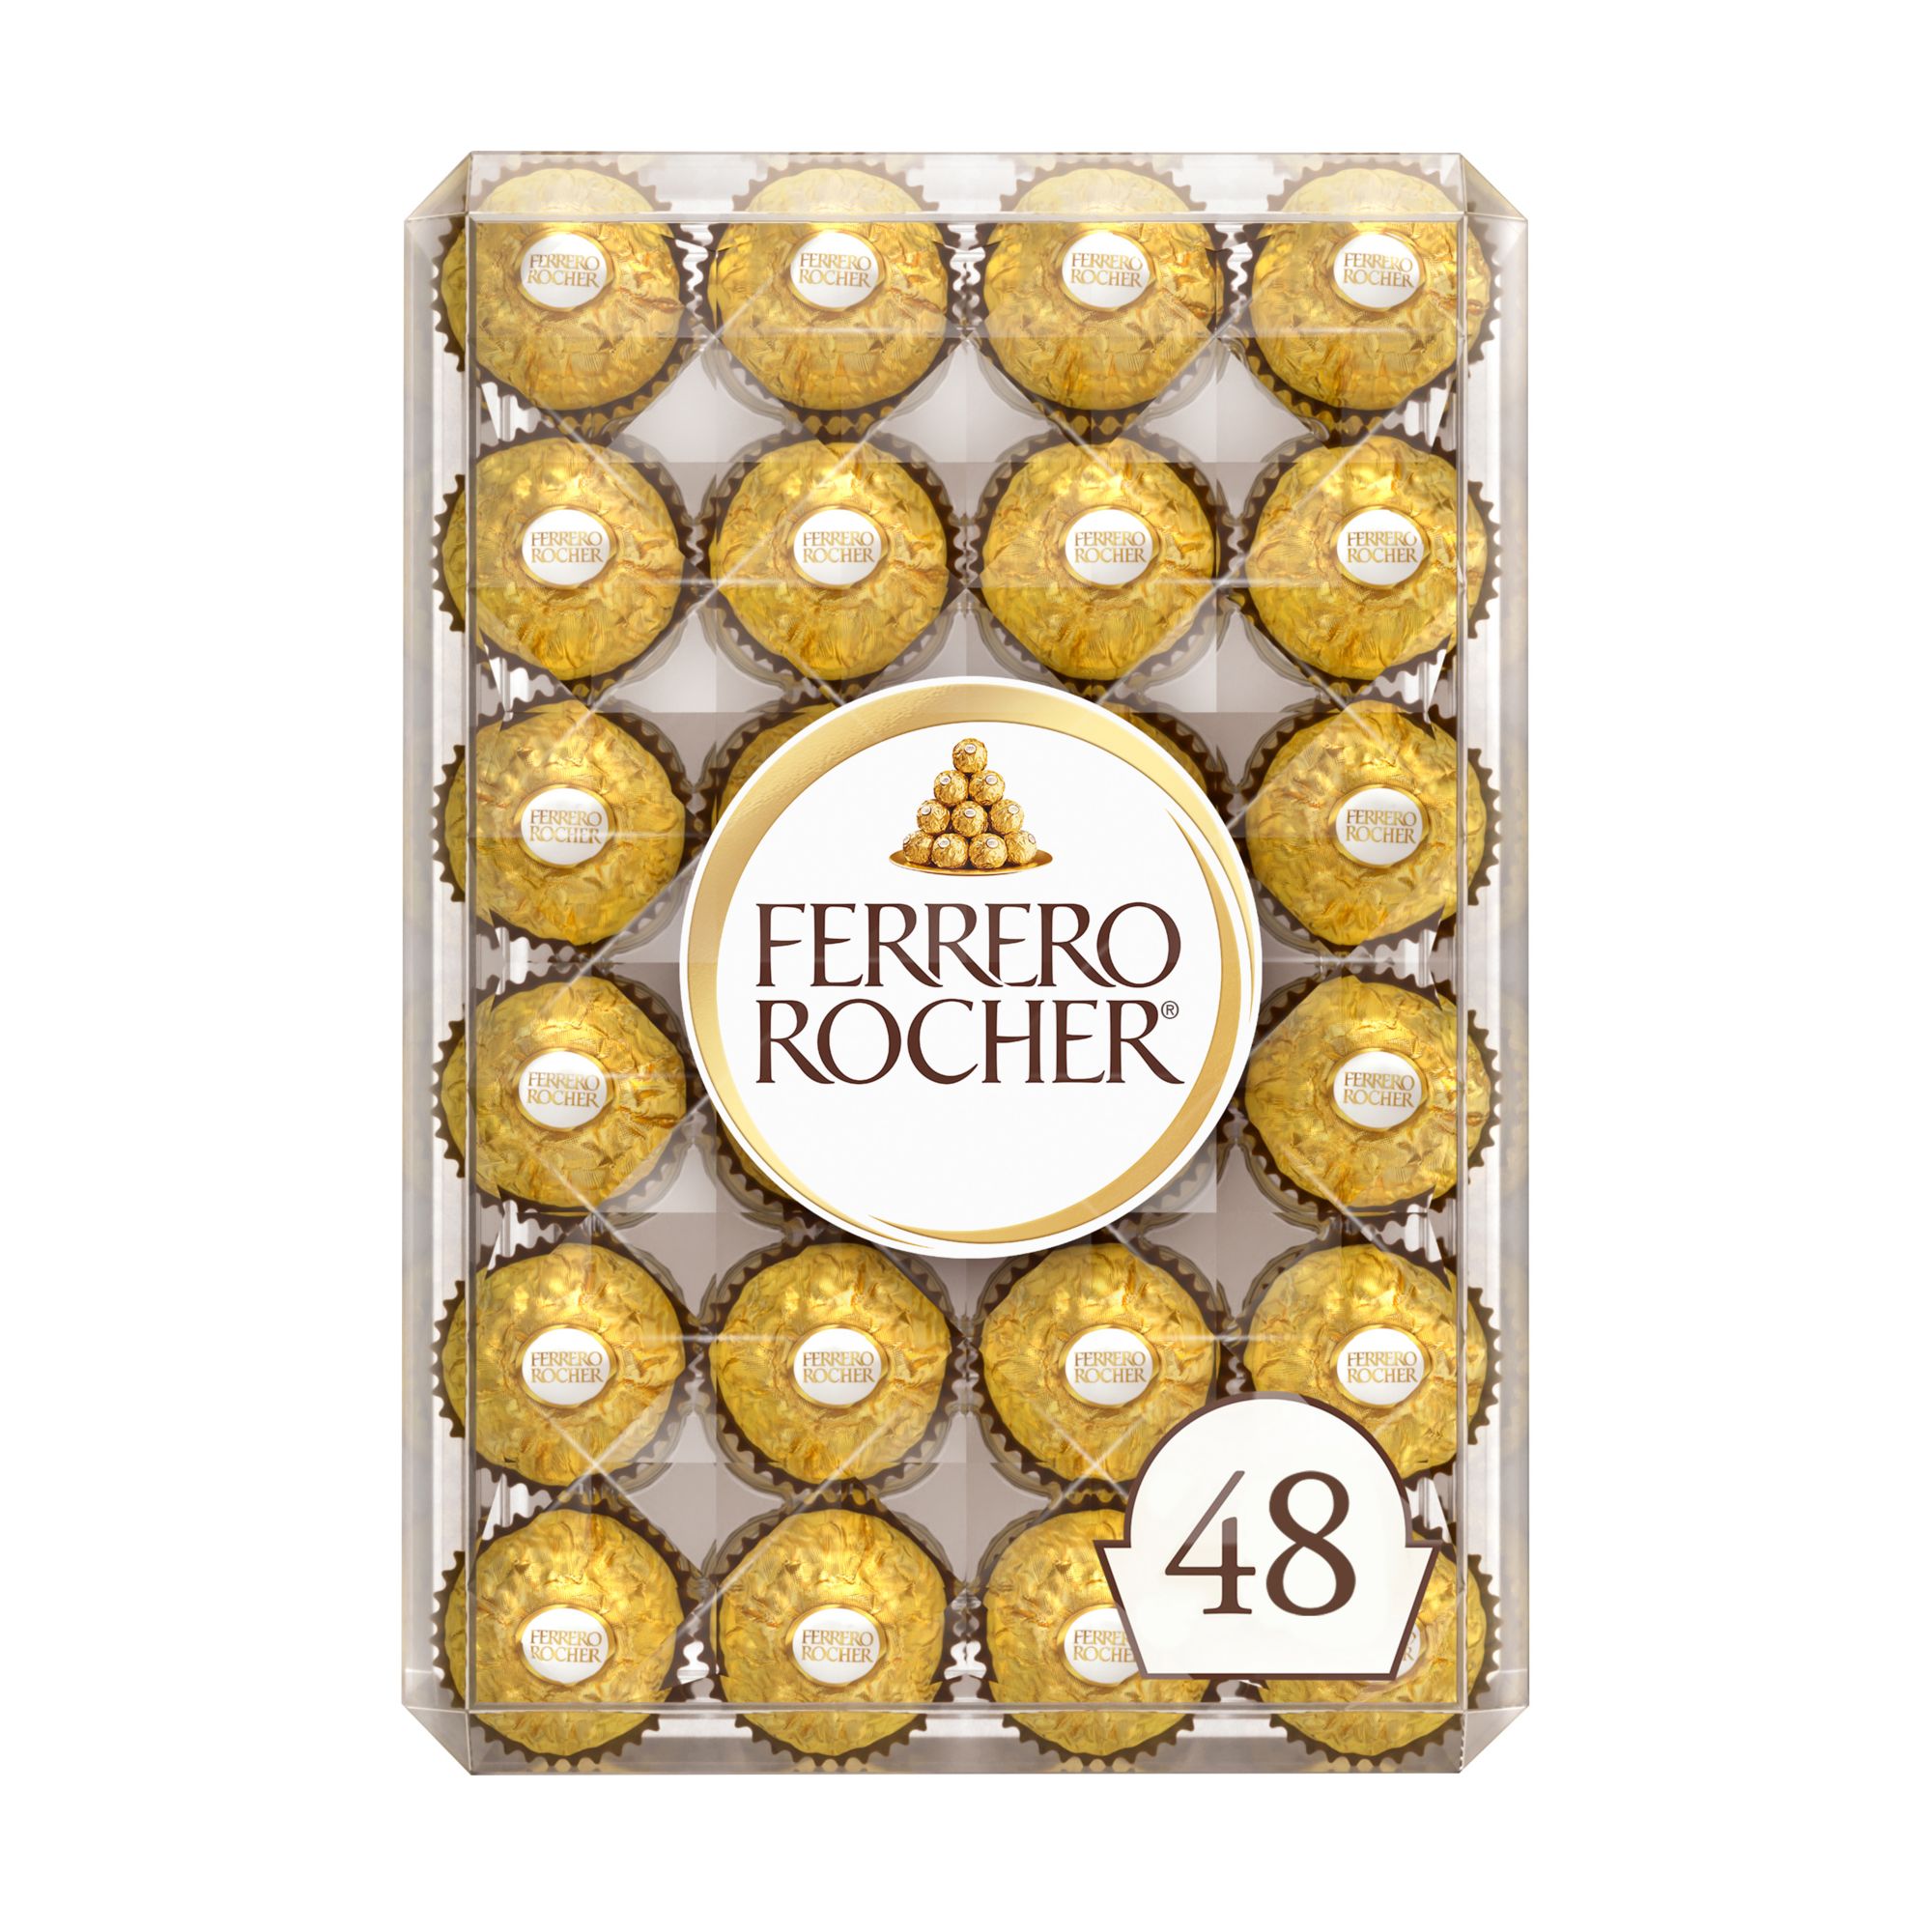 Ferrero Rocher Hazelnut Chocolate Diamond Gift Box - 21.2oz/48ct